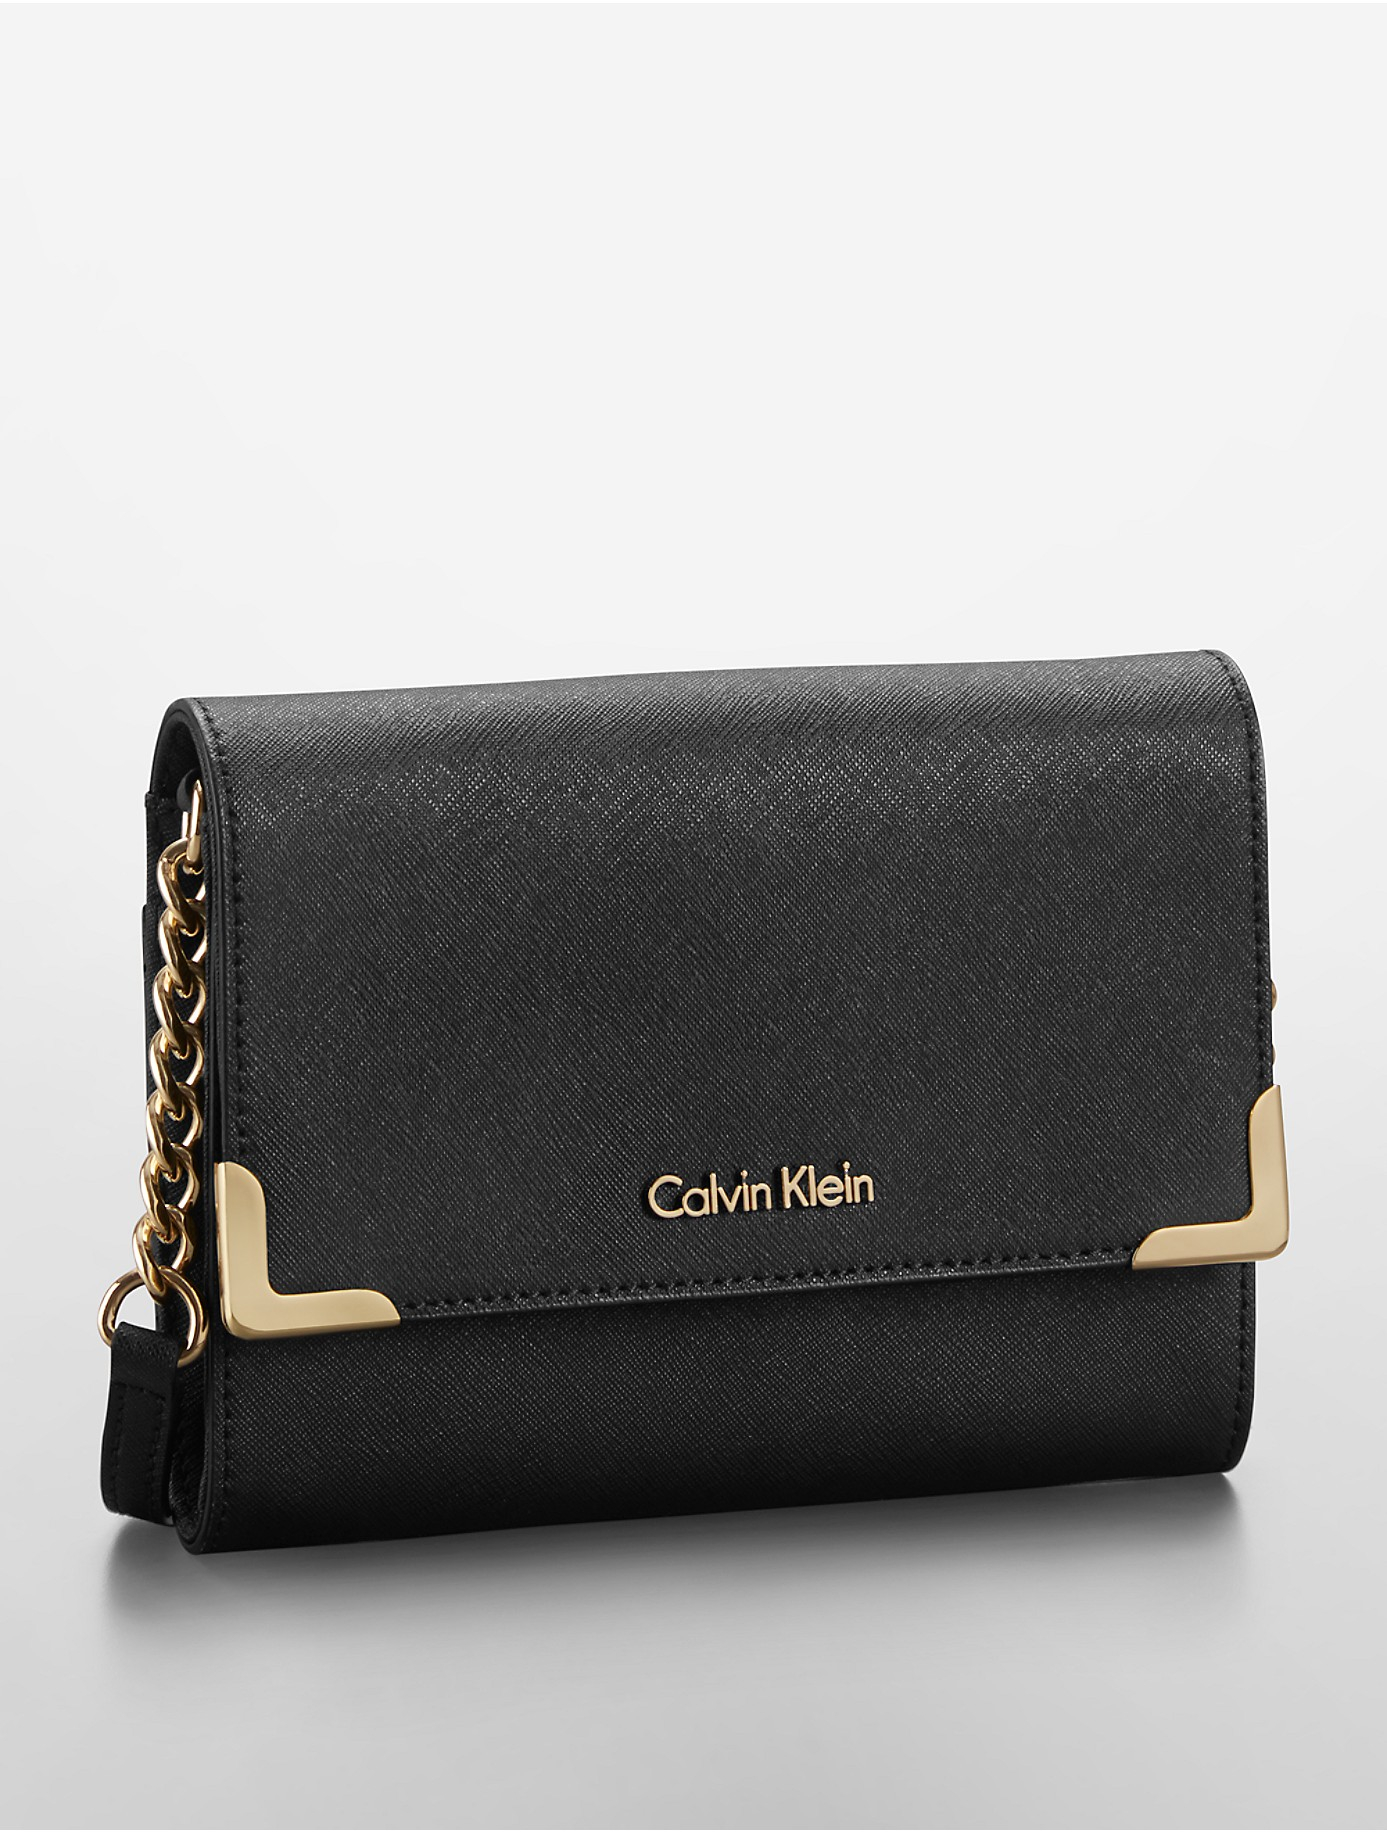 Calvin Klein Saffiano Leather Crossbody Bag in Black | Lyst